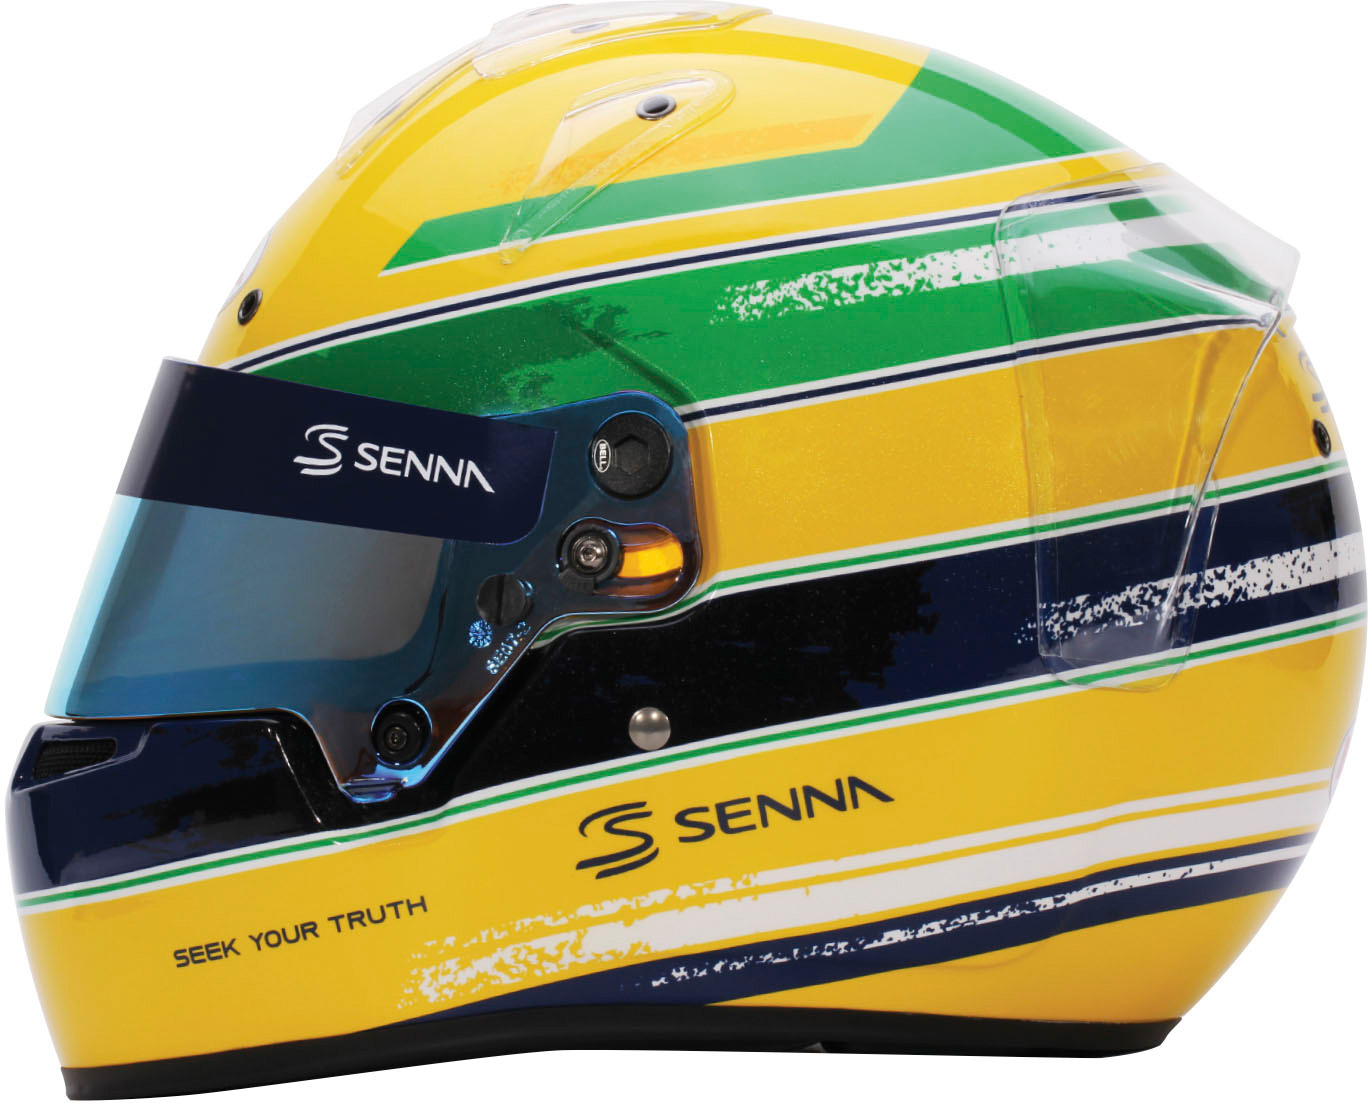 BELL Helm KC7 CMR Ayrton Senna Edition